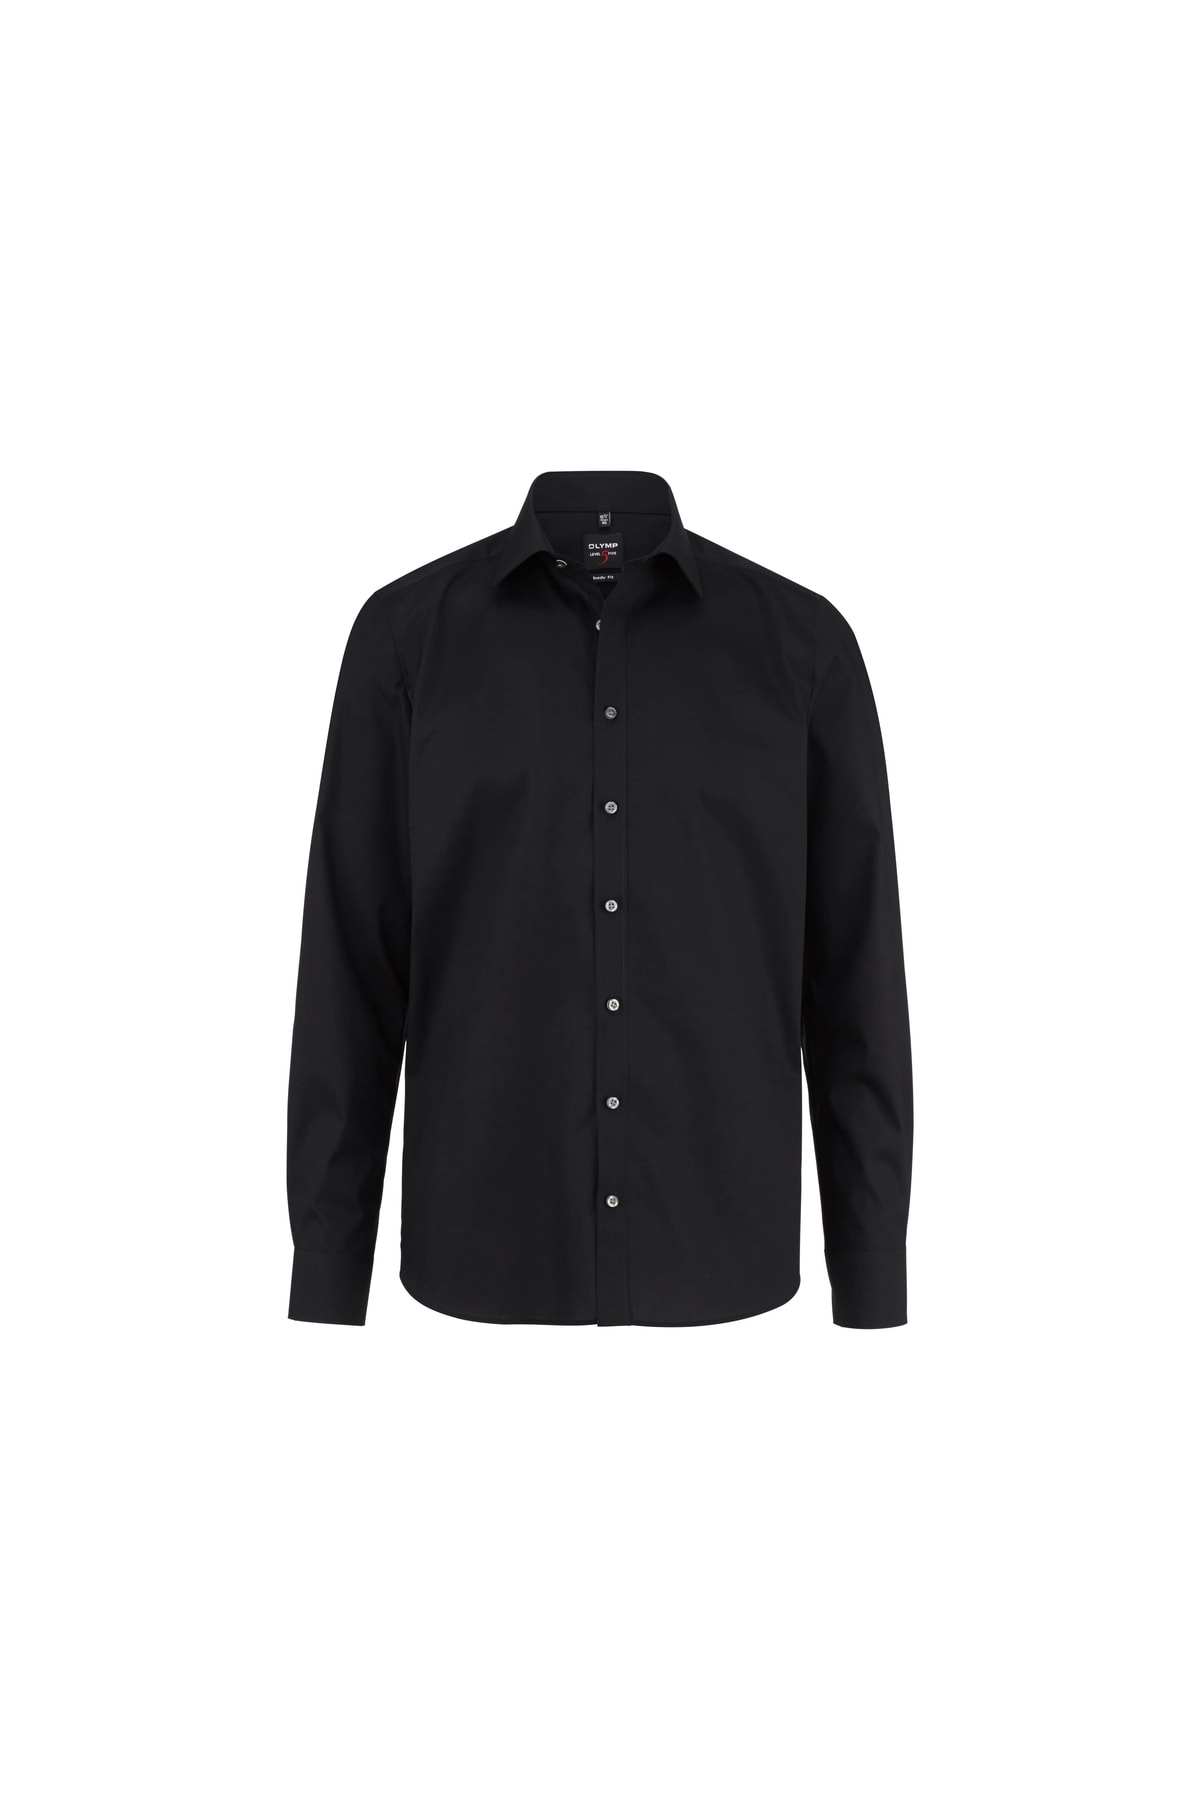 OLYMP Hemd Schwarz Regular Fit Fast ausverkauft